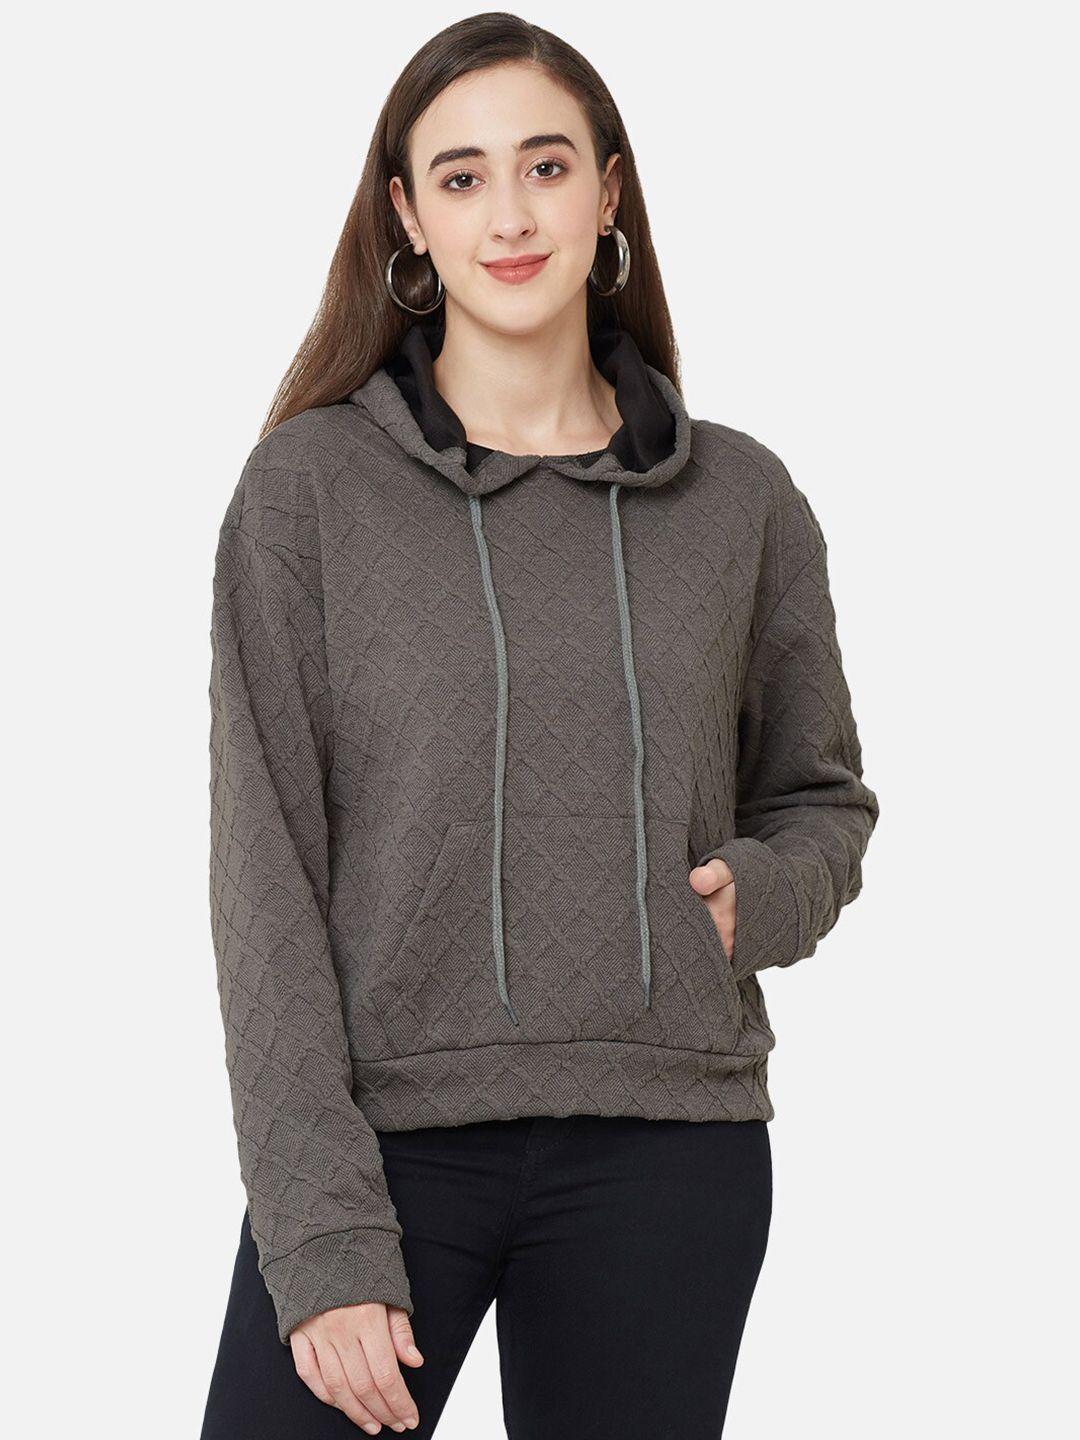 109f-women-grey-sweatshirt